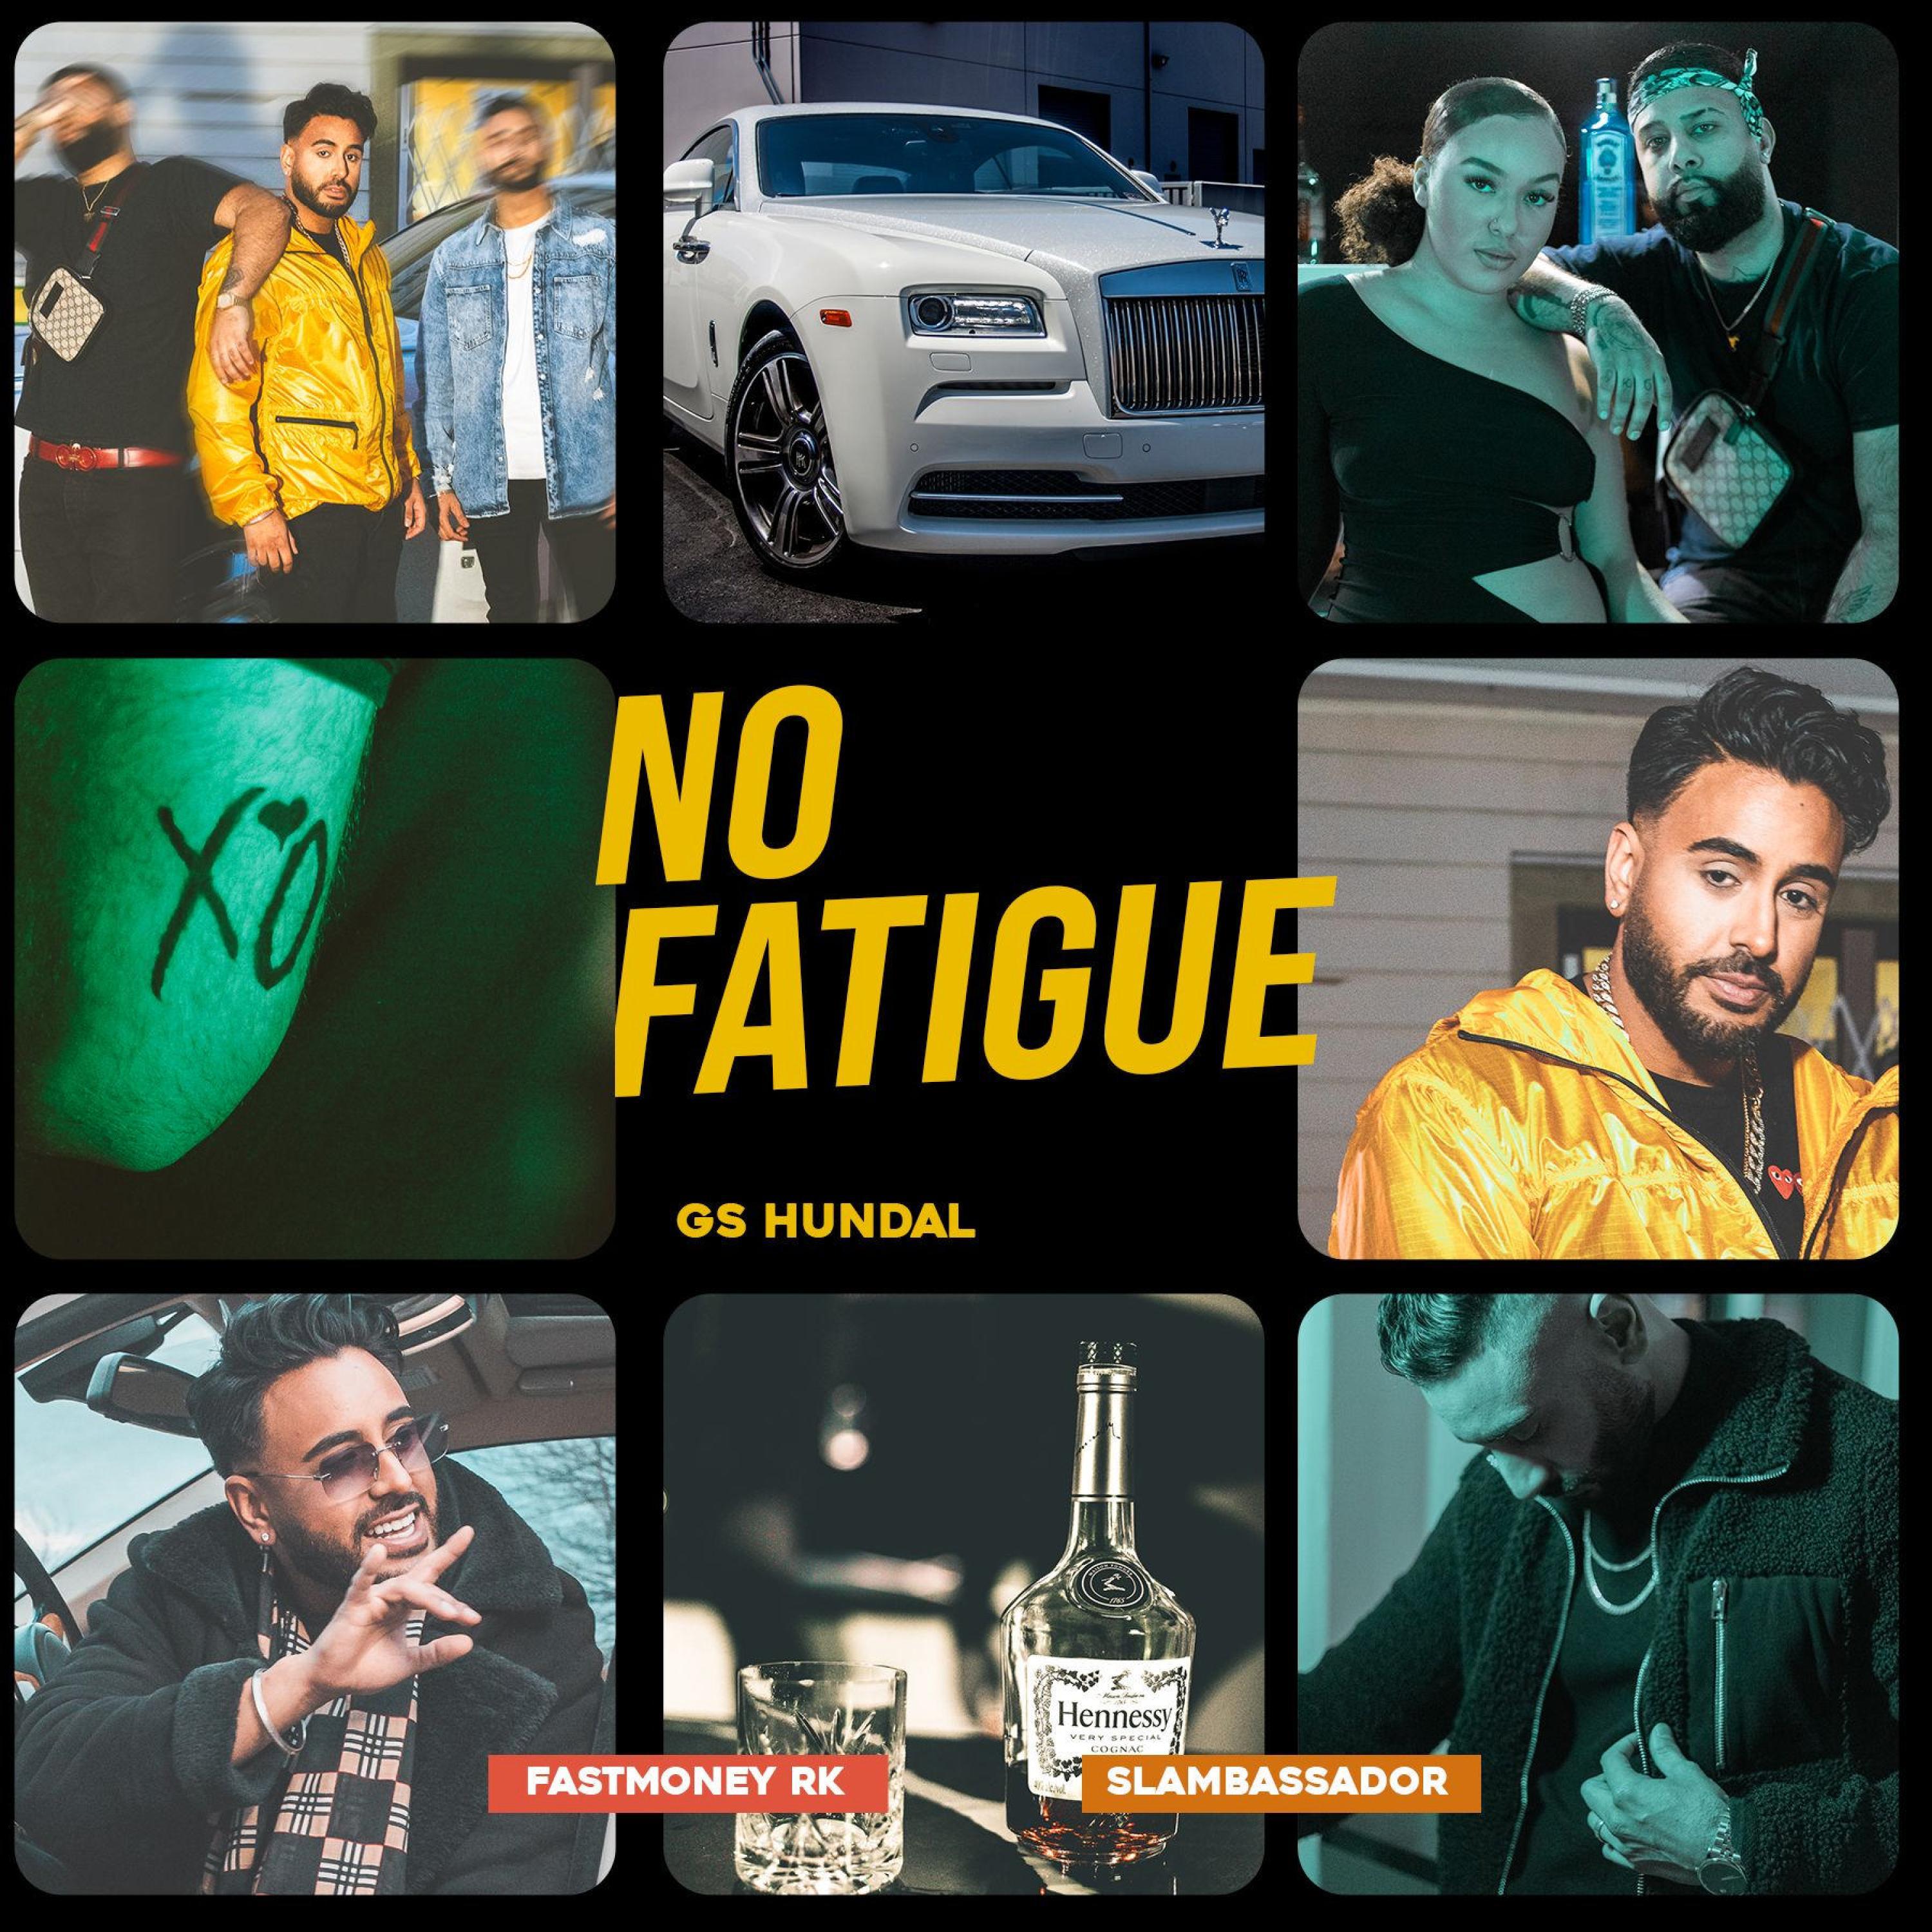 GS Hundal - No Fatigue (feat. Fastmoney Rk & Slambassador)